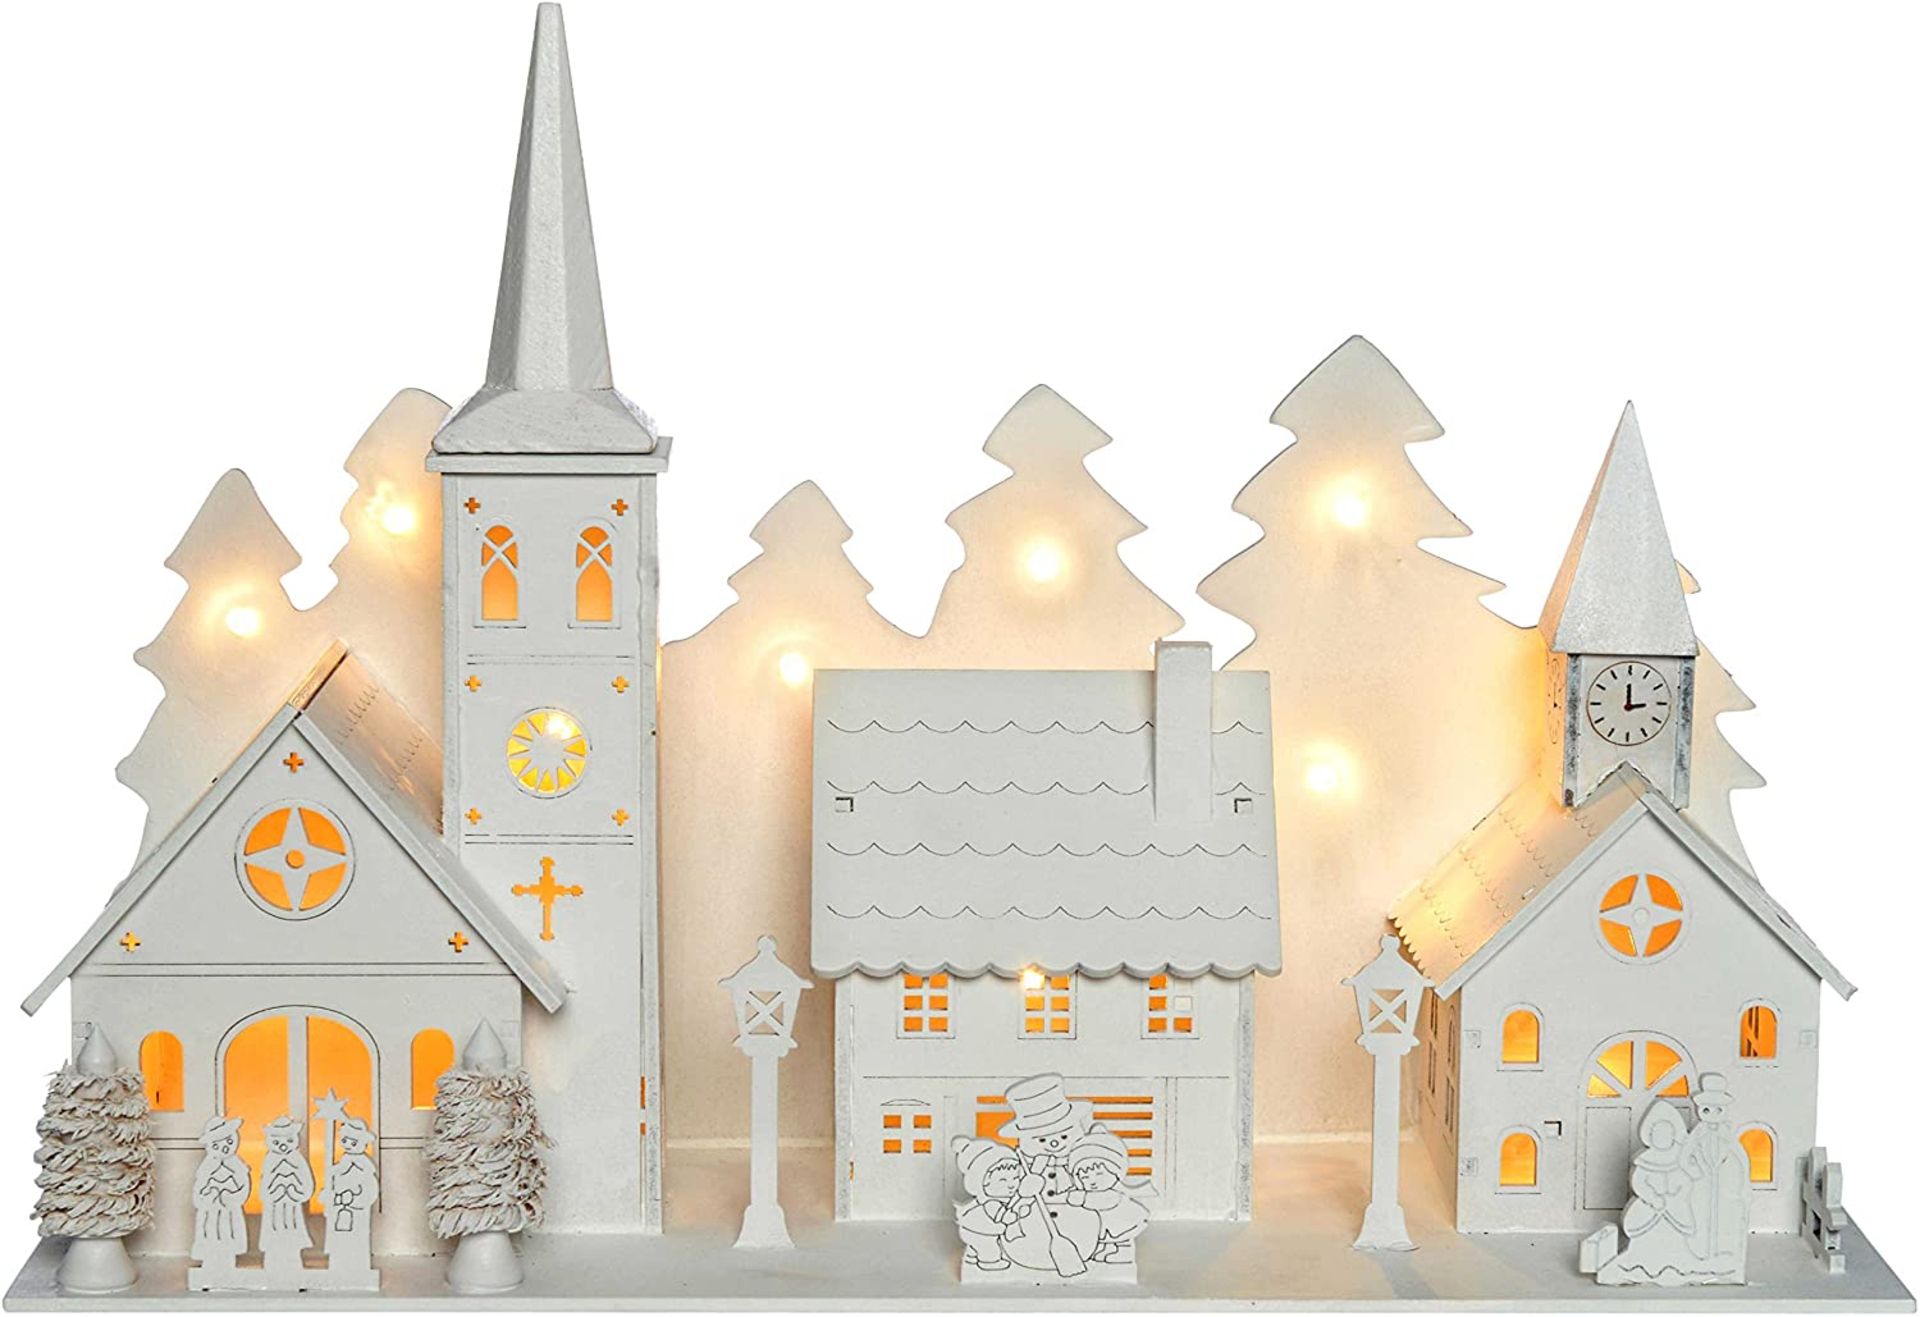 WeRChristmas Pre-Lit Wooden Church Village Scene Illuminated with 12-LED Lights, 24 cm - White